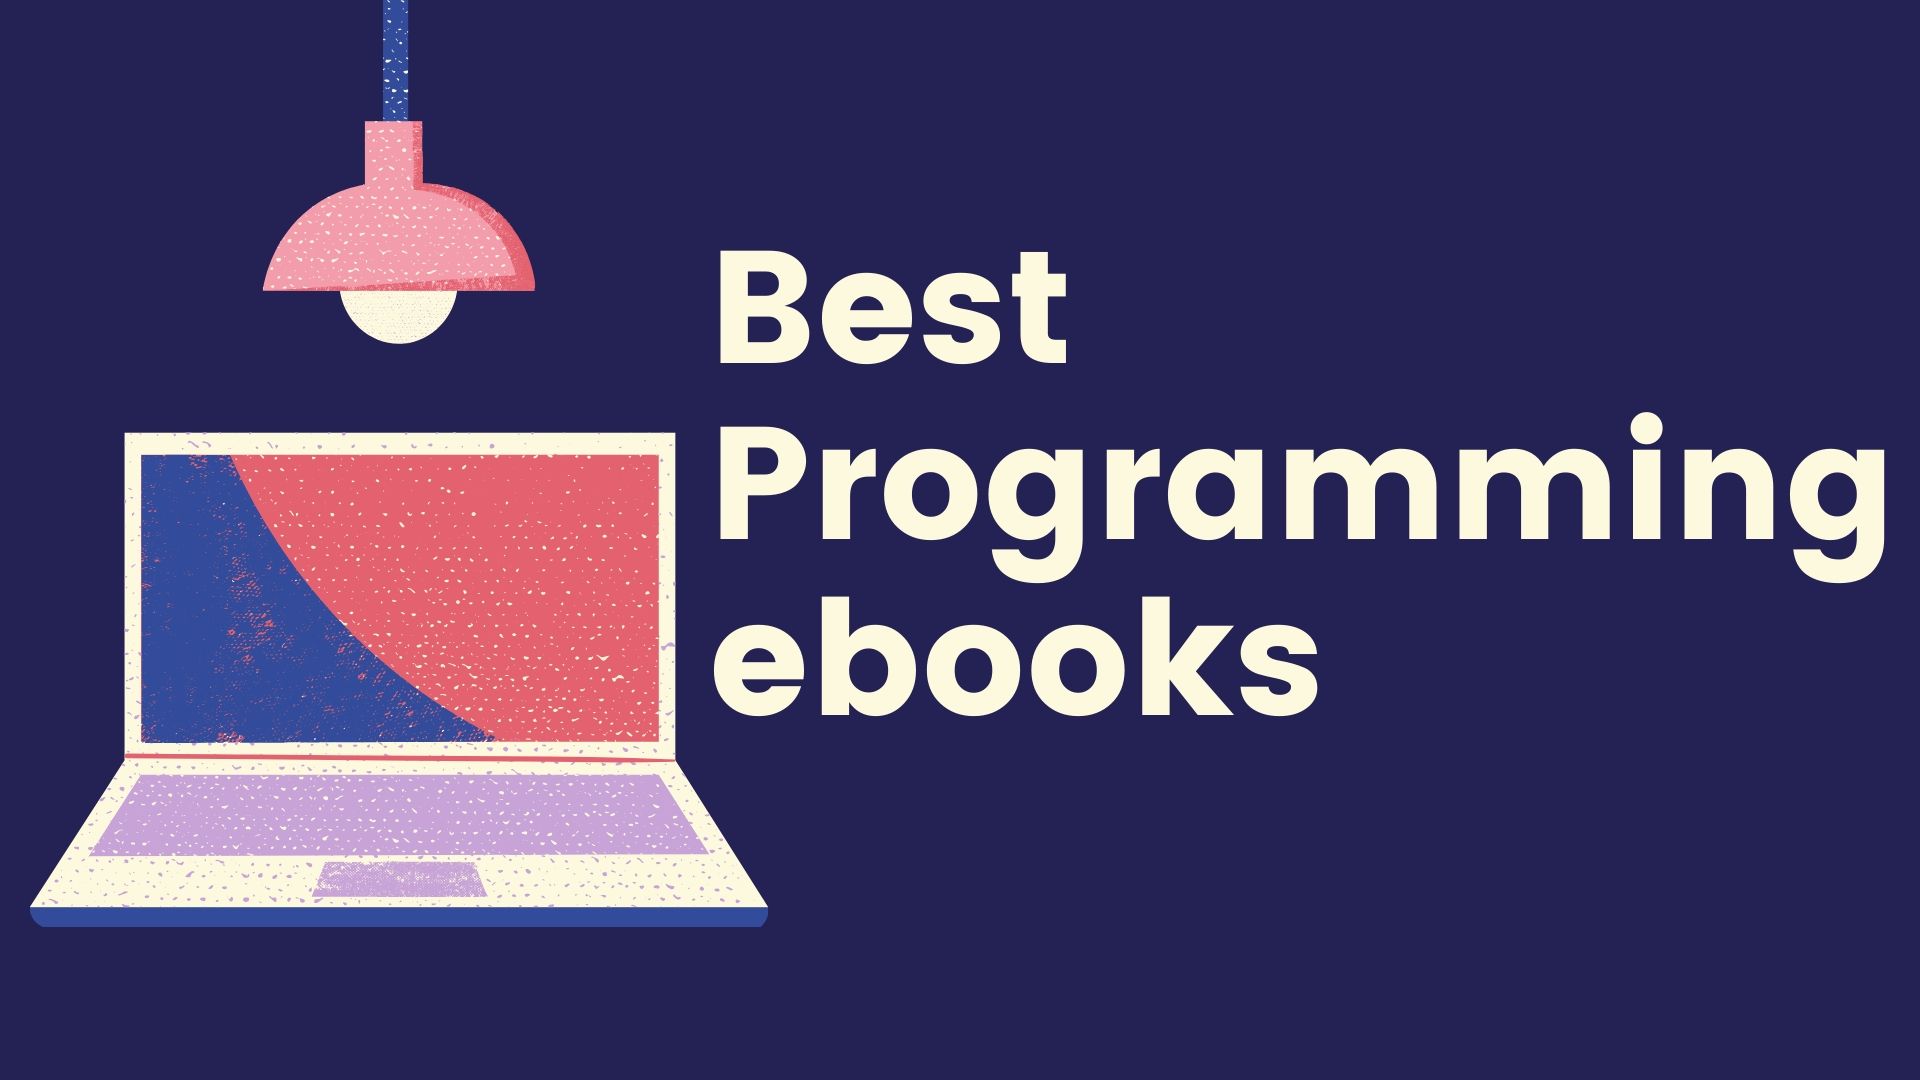 best ebooks to learn programming